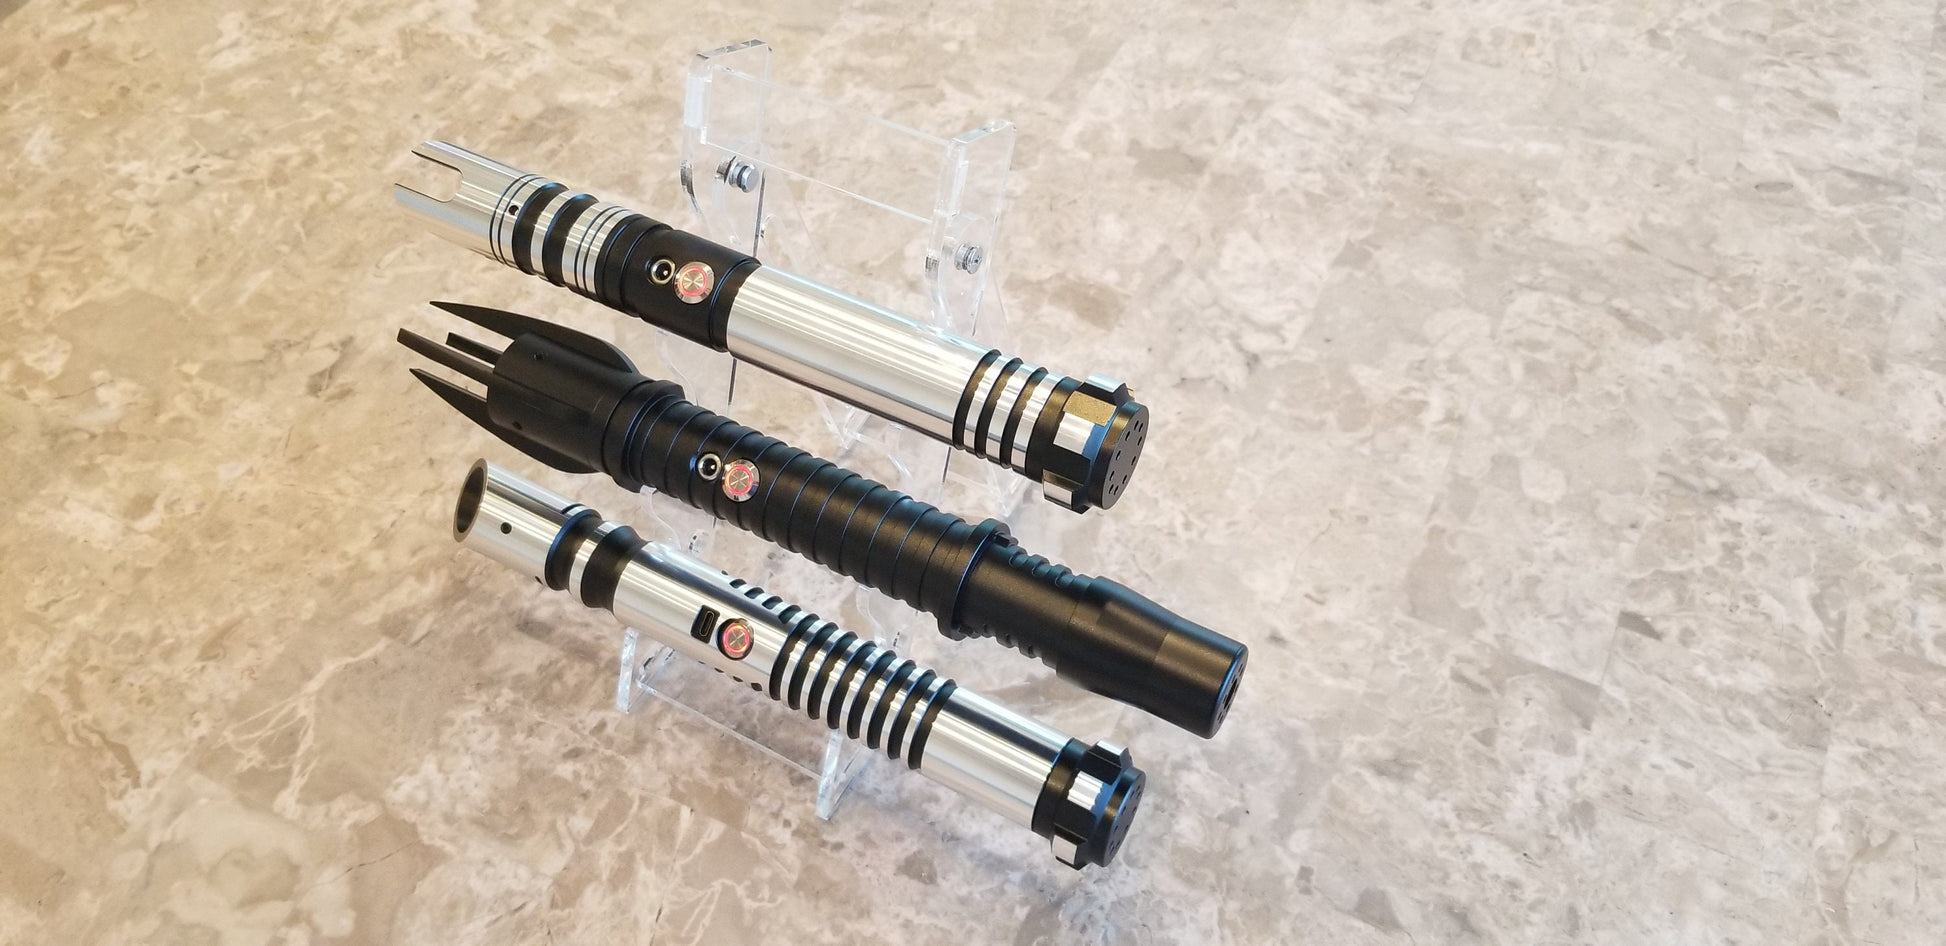 Lightsaber Display Stand Acrylic Lightsaber Stand Holder Extremely Durable Light Saber Rack Holds 3 Sabers Star Wars Bossaber